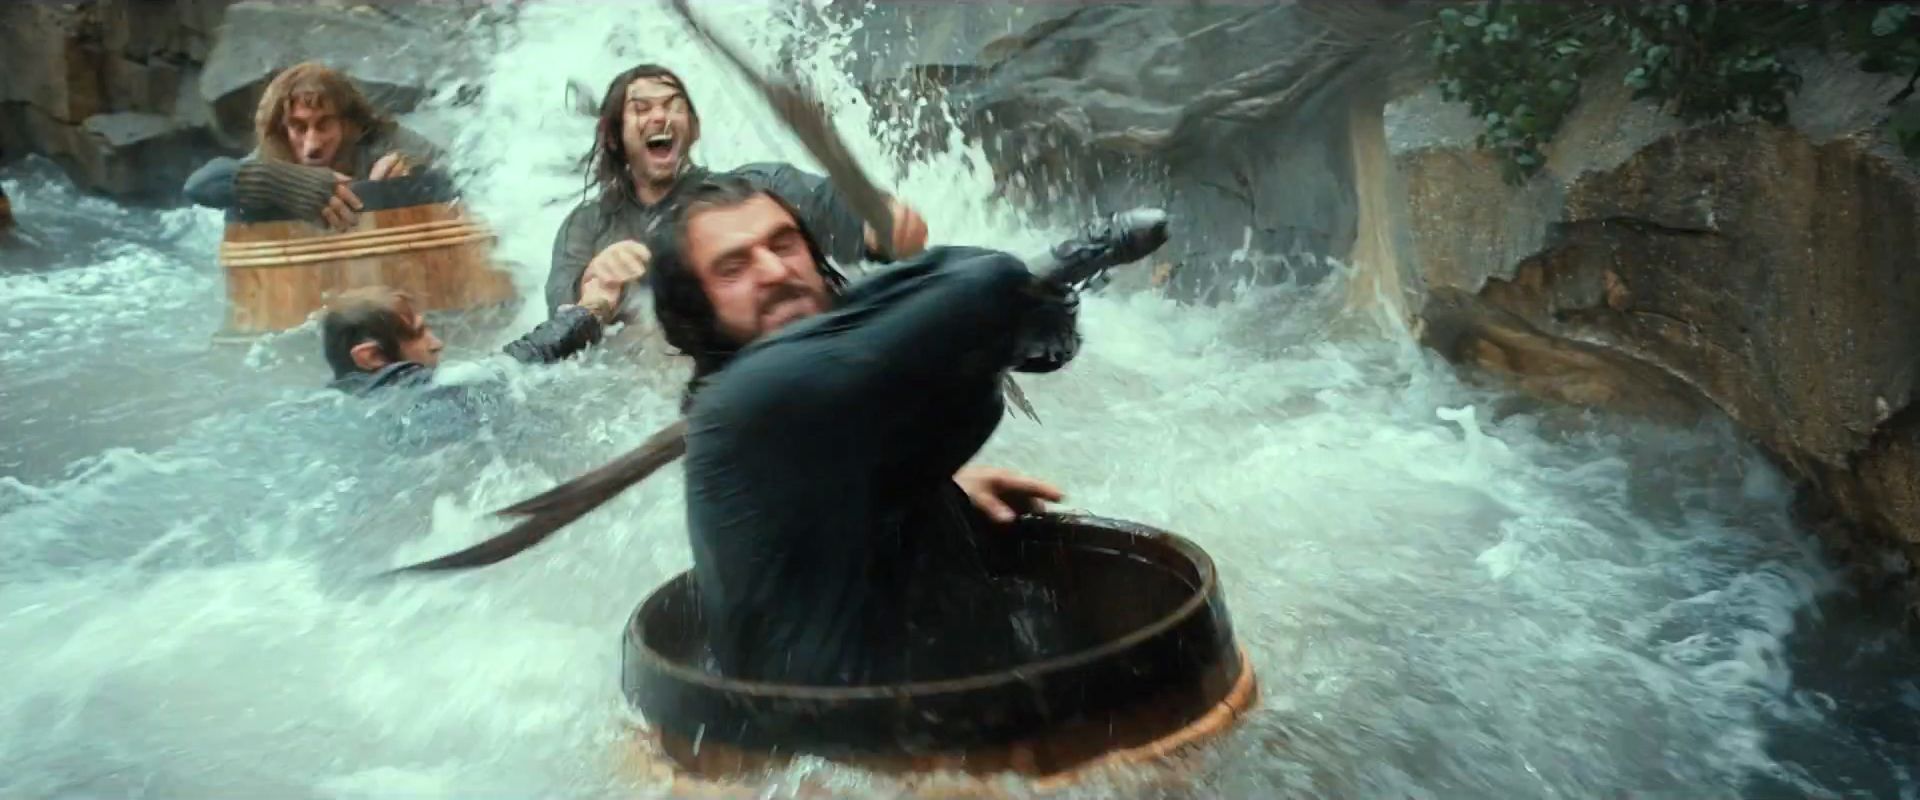 The Hobbit: The Desolation Of Smaug Trailer Photo #11